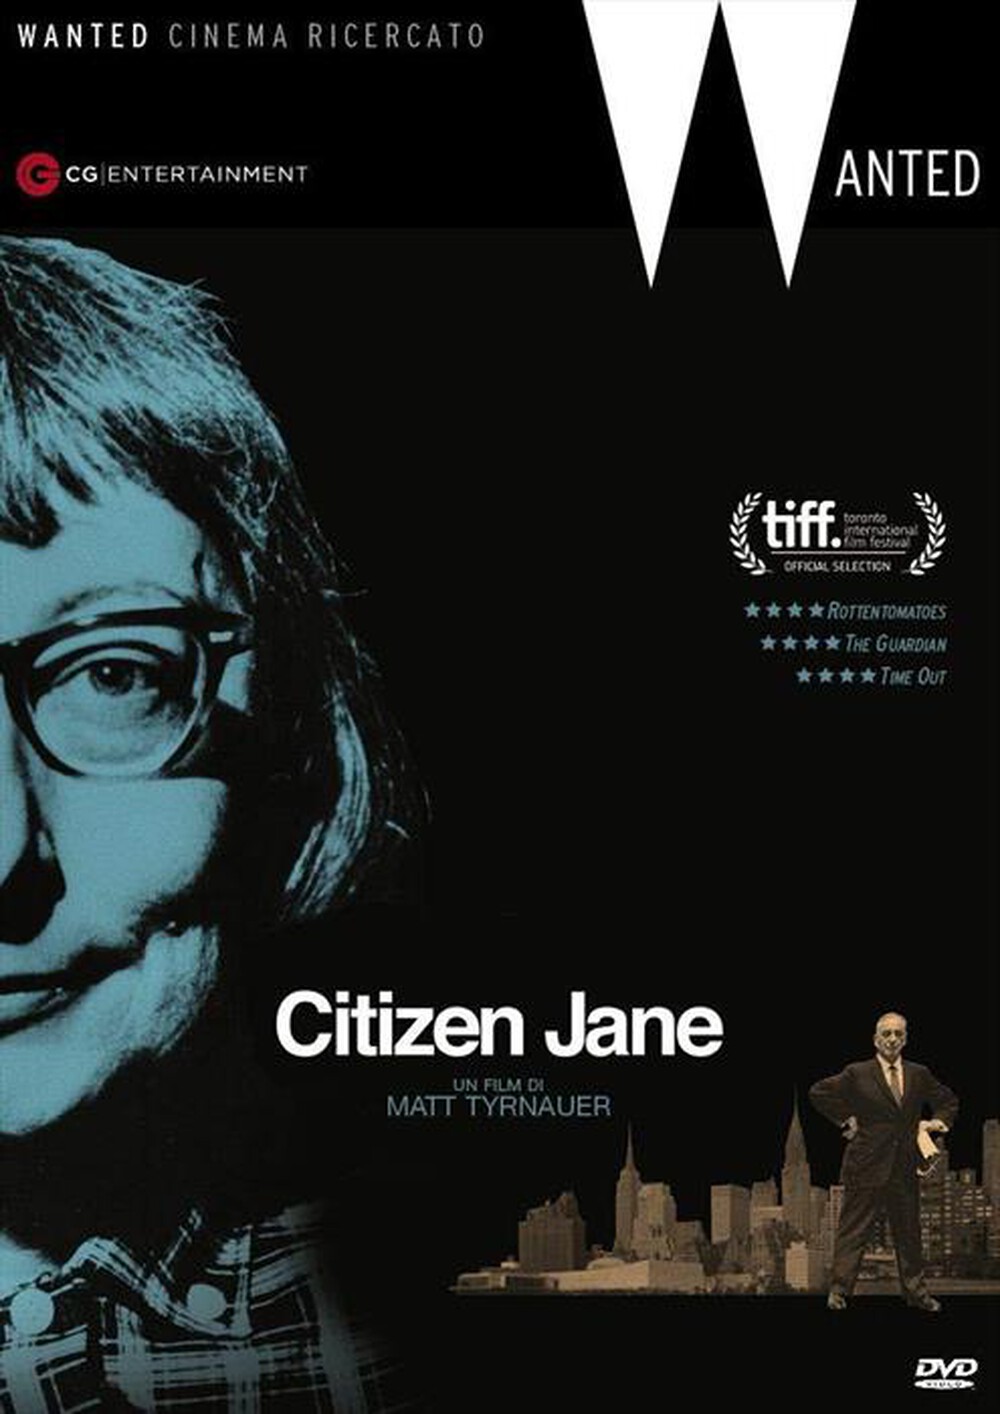 "Wanted - Citizen Jane"